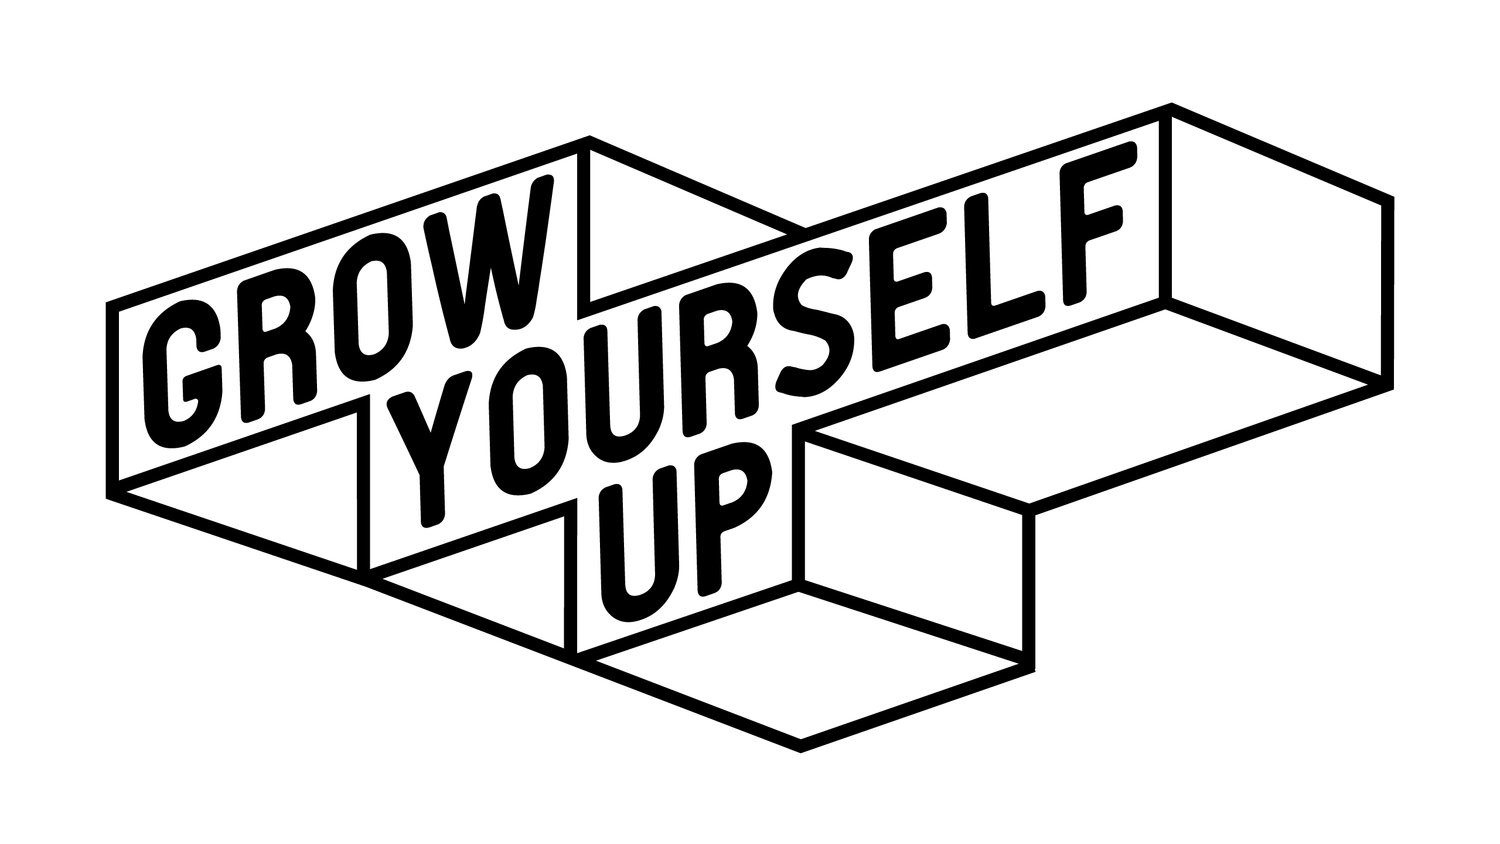 Grow Yourself Up